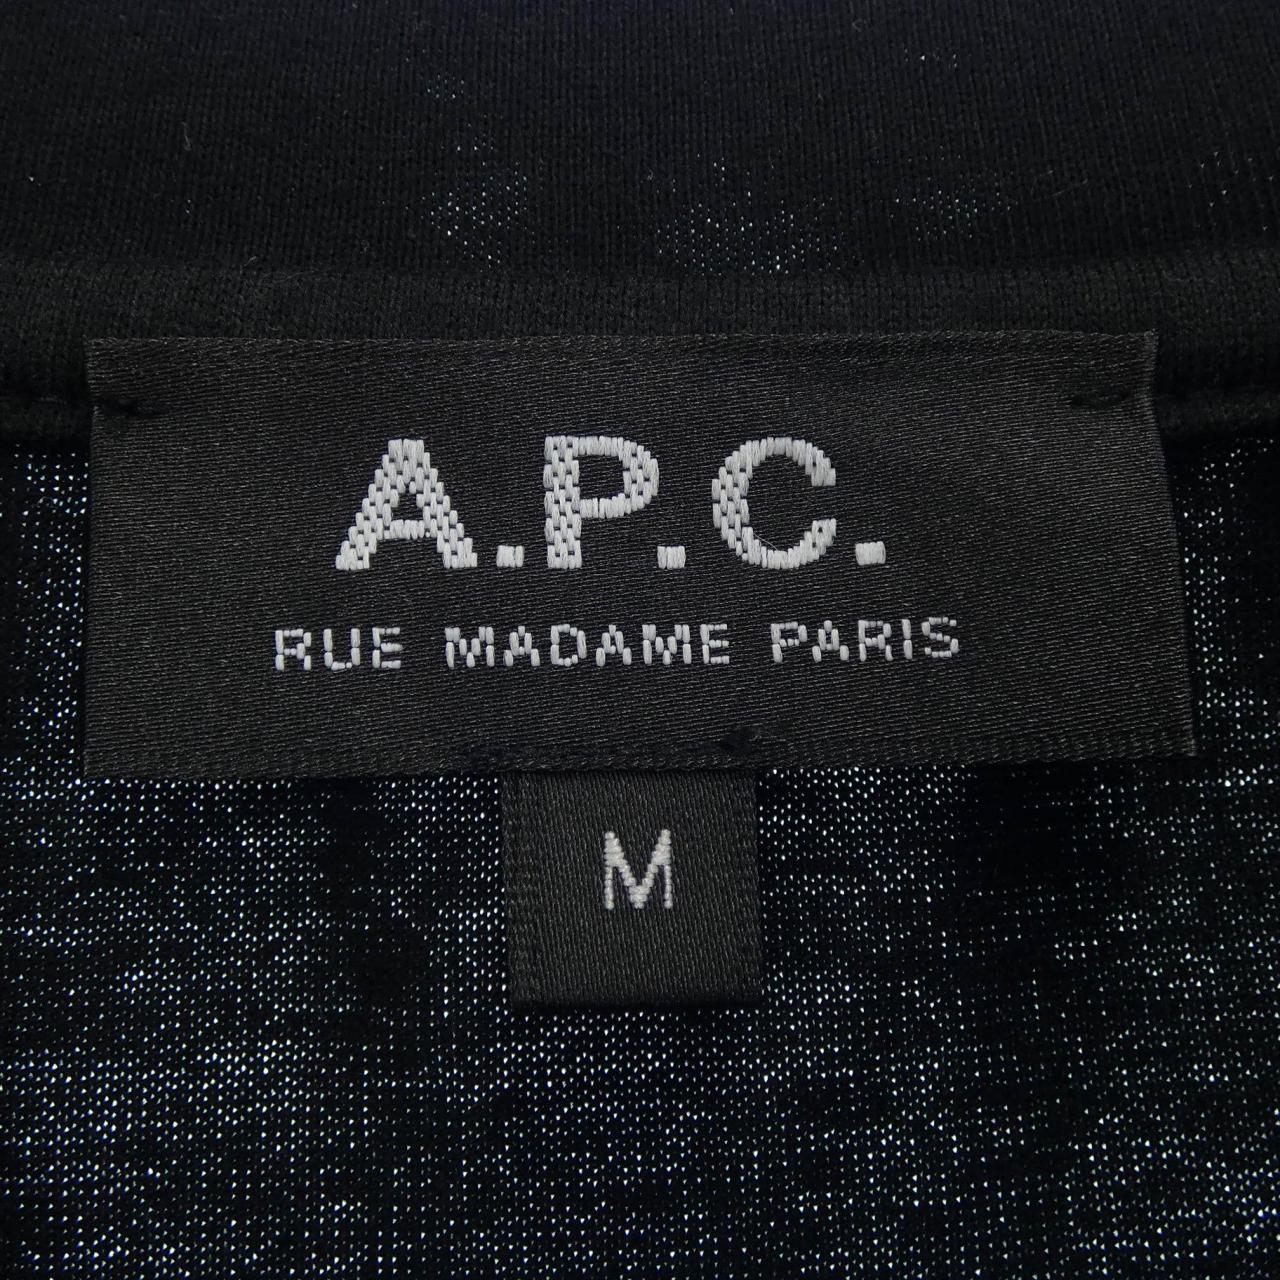 A.P.C. APC T-shirt